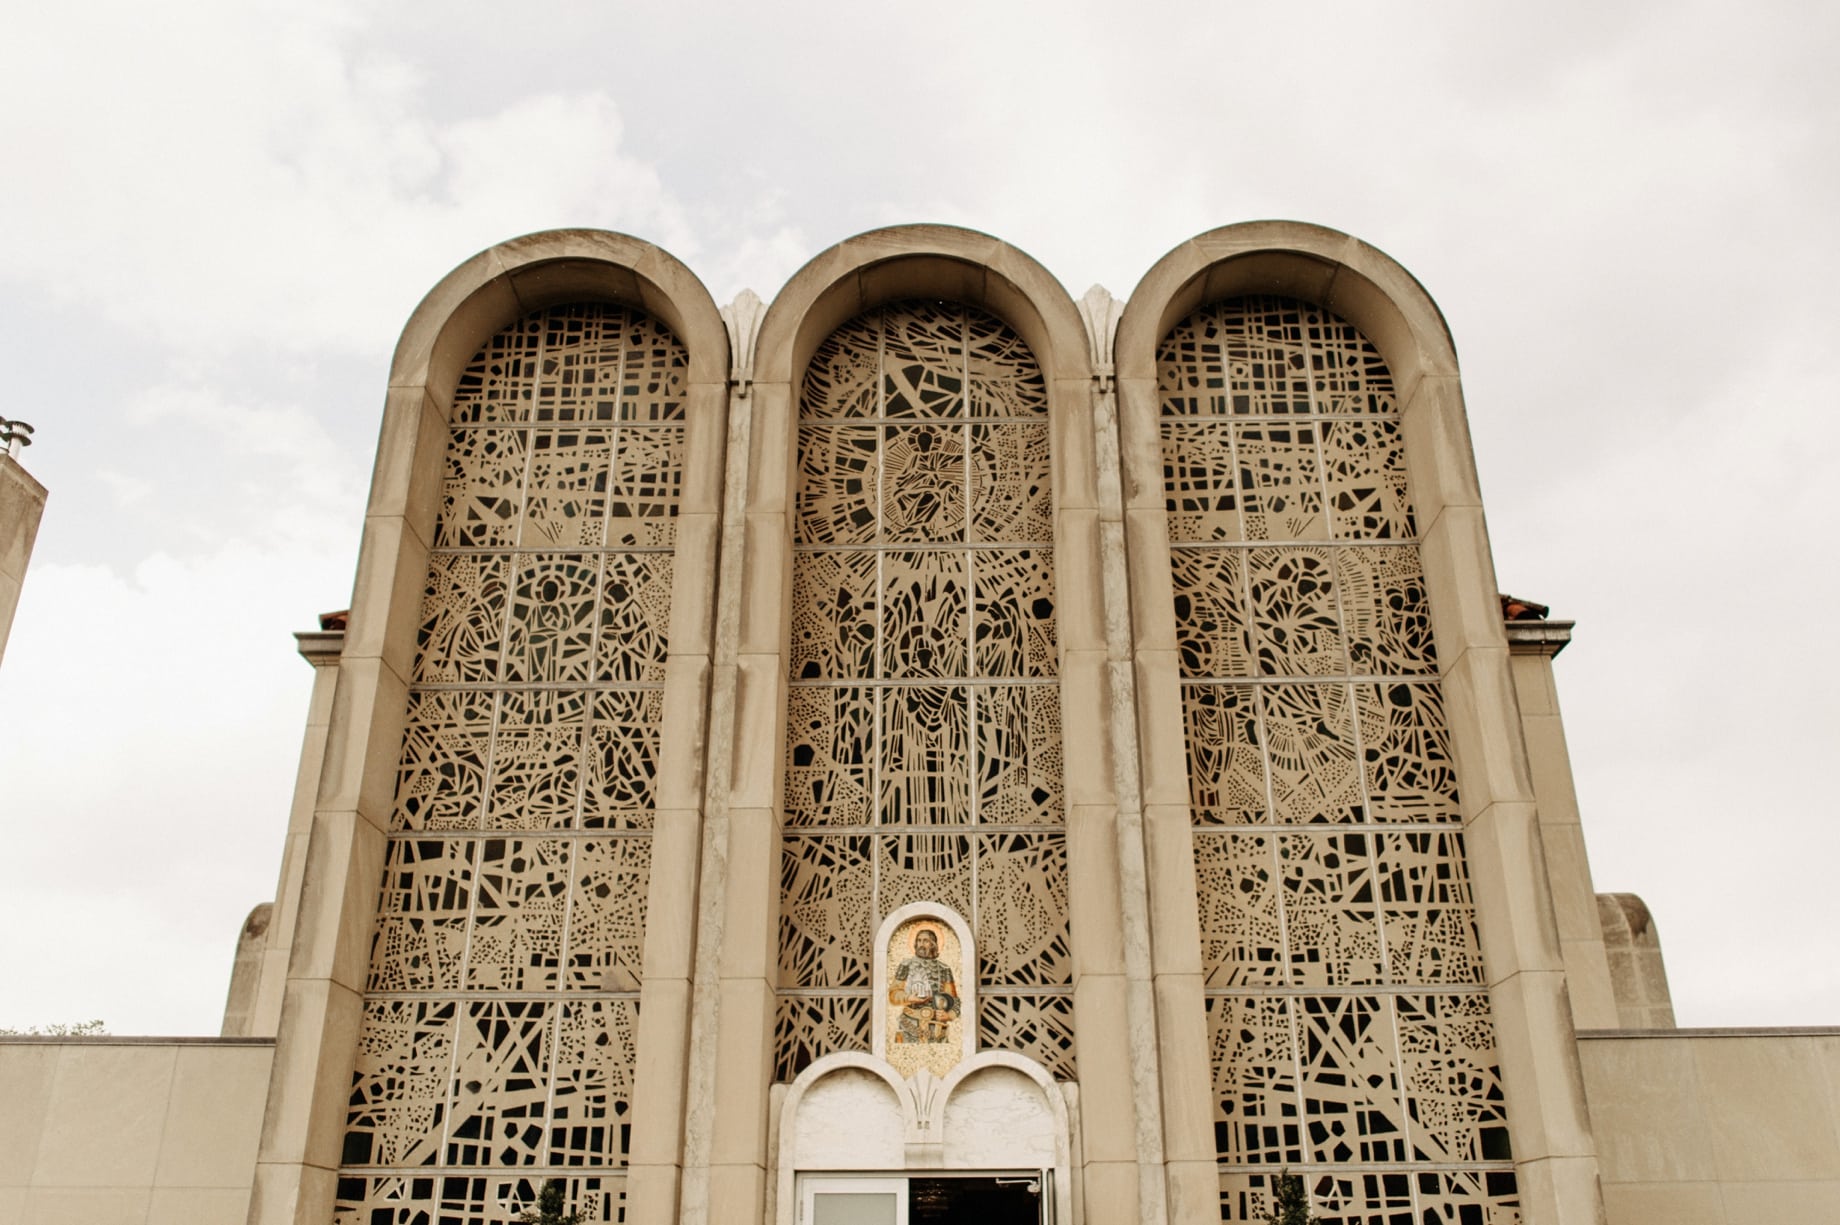 exterior of church